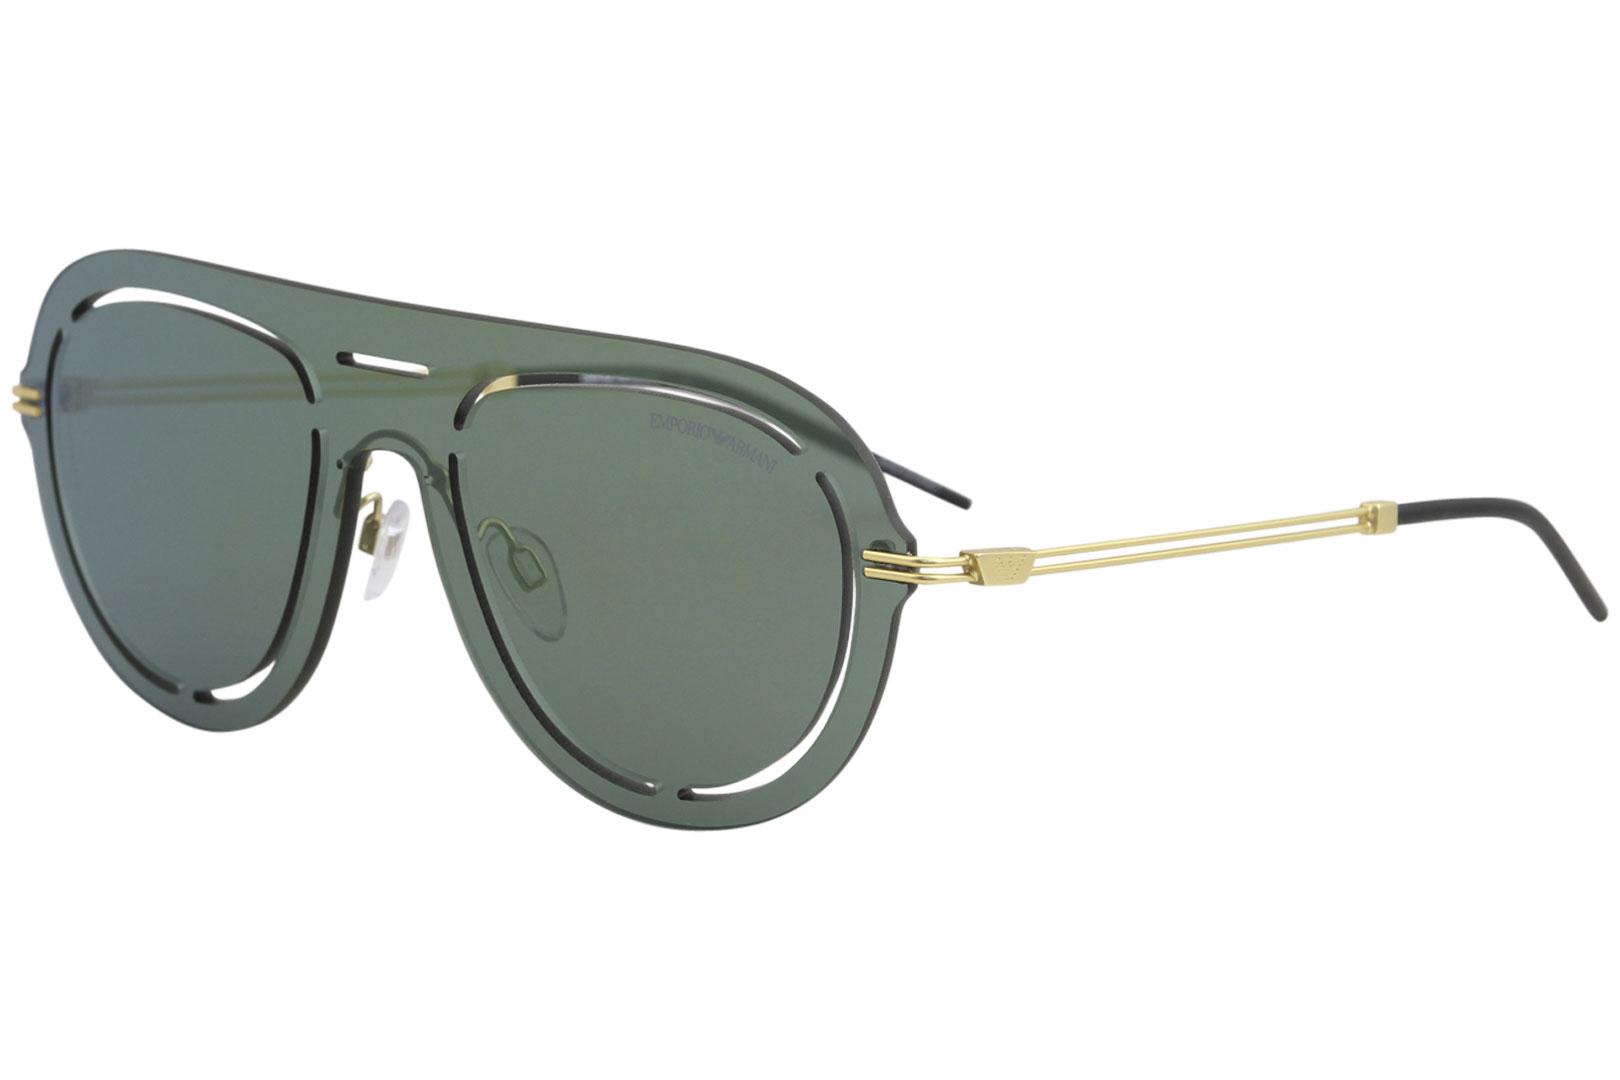 Emporio Armani Men's EA2057 EA/2057 Fashion Pilot Sunglasses - Gold/Light Green Mirror   3002/6R - Lens 41 Bridge 141 Temple 140mm